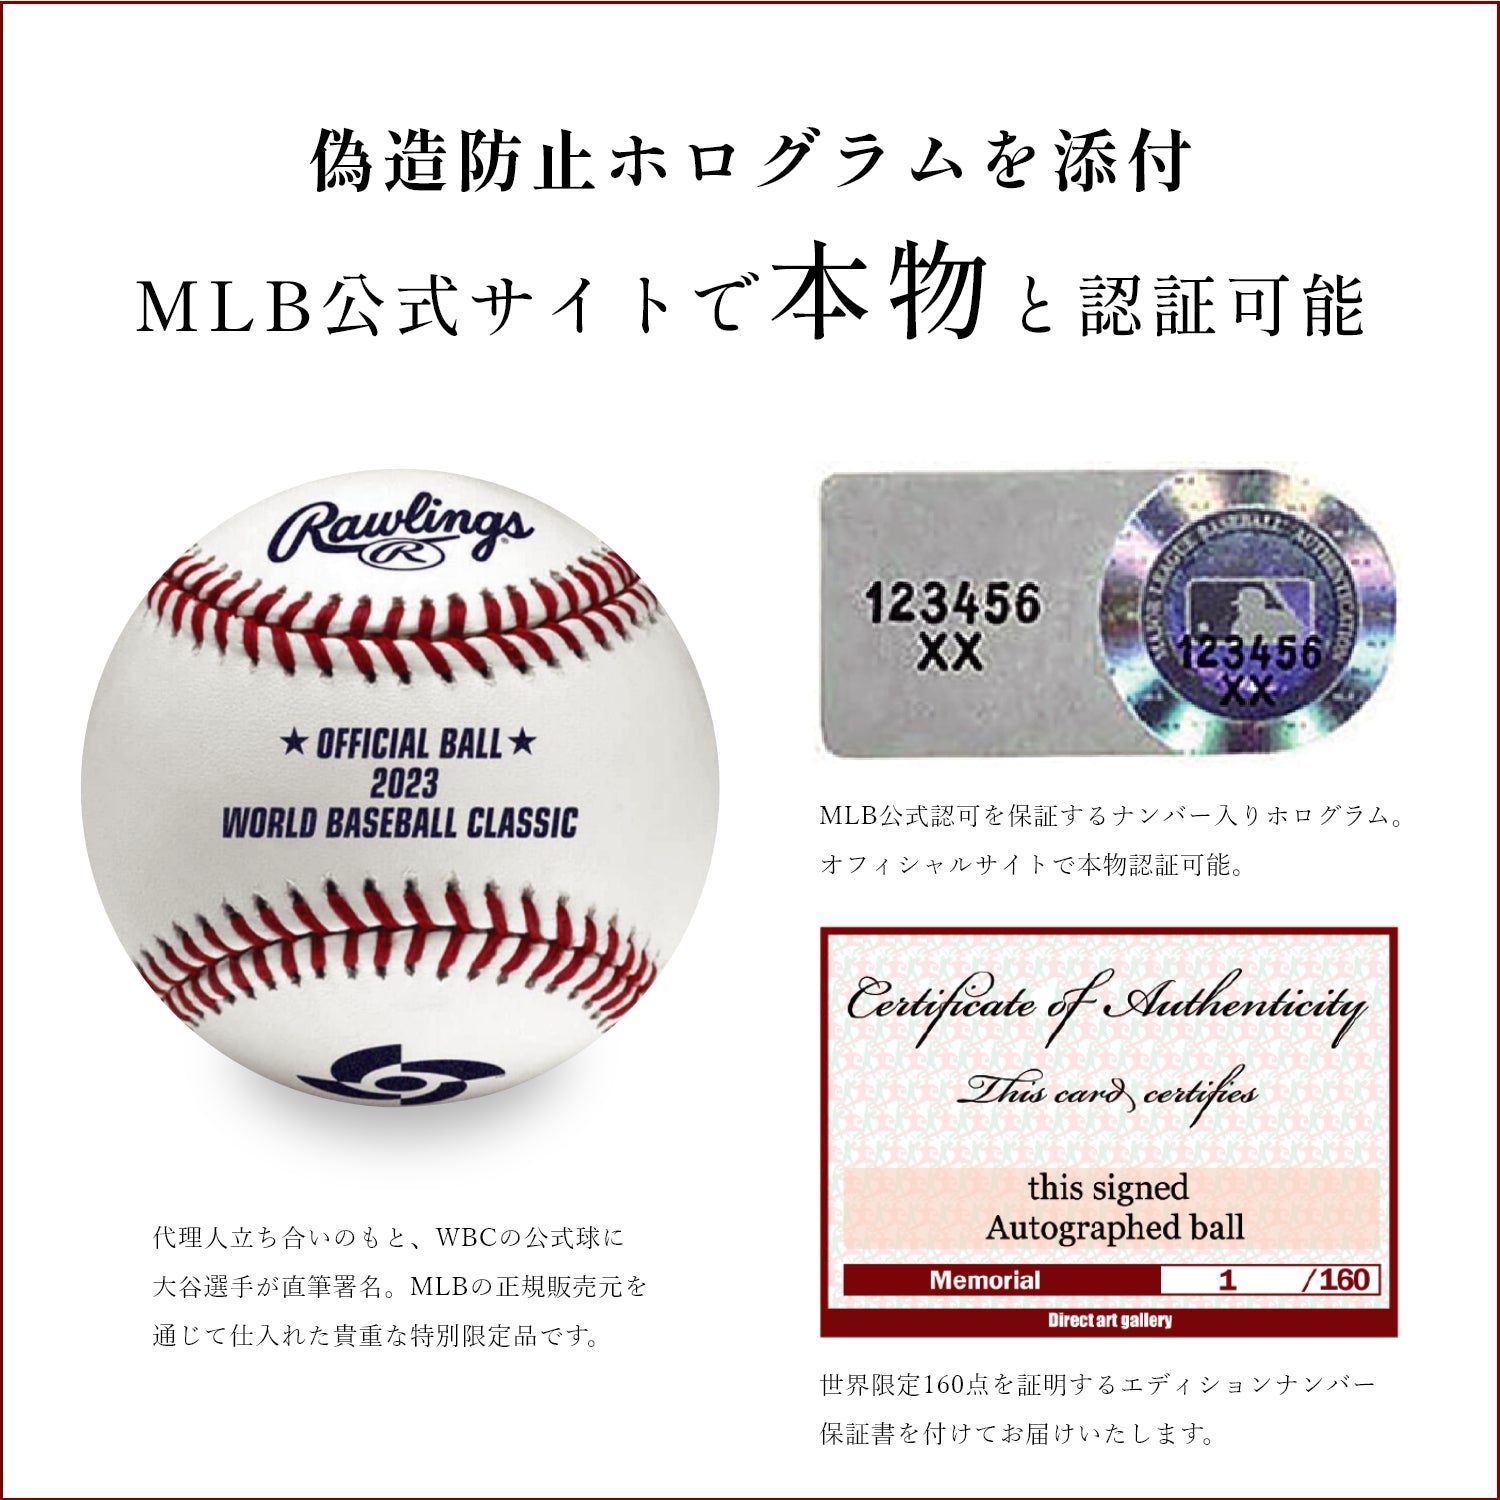 MLB WORLD BASEBALL CLASSIC 2023 &nbsp;大谷翔平 亲笔签名 WBC官方棒球